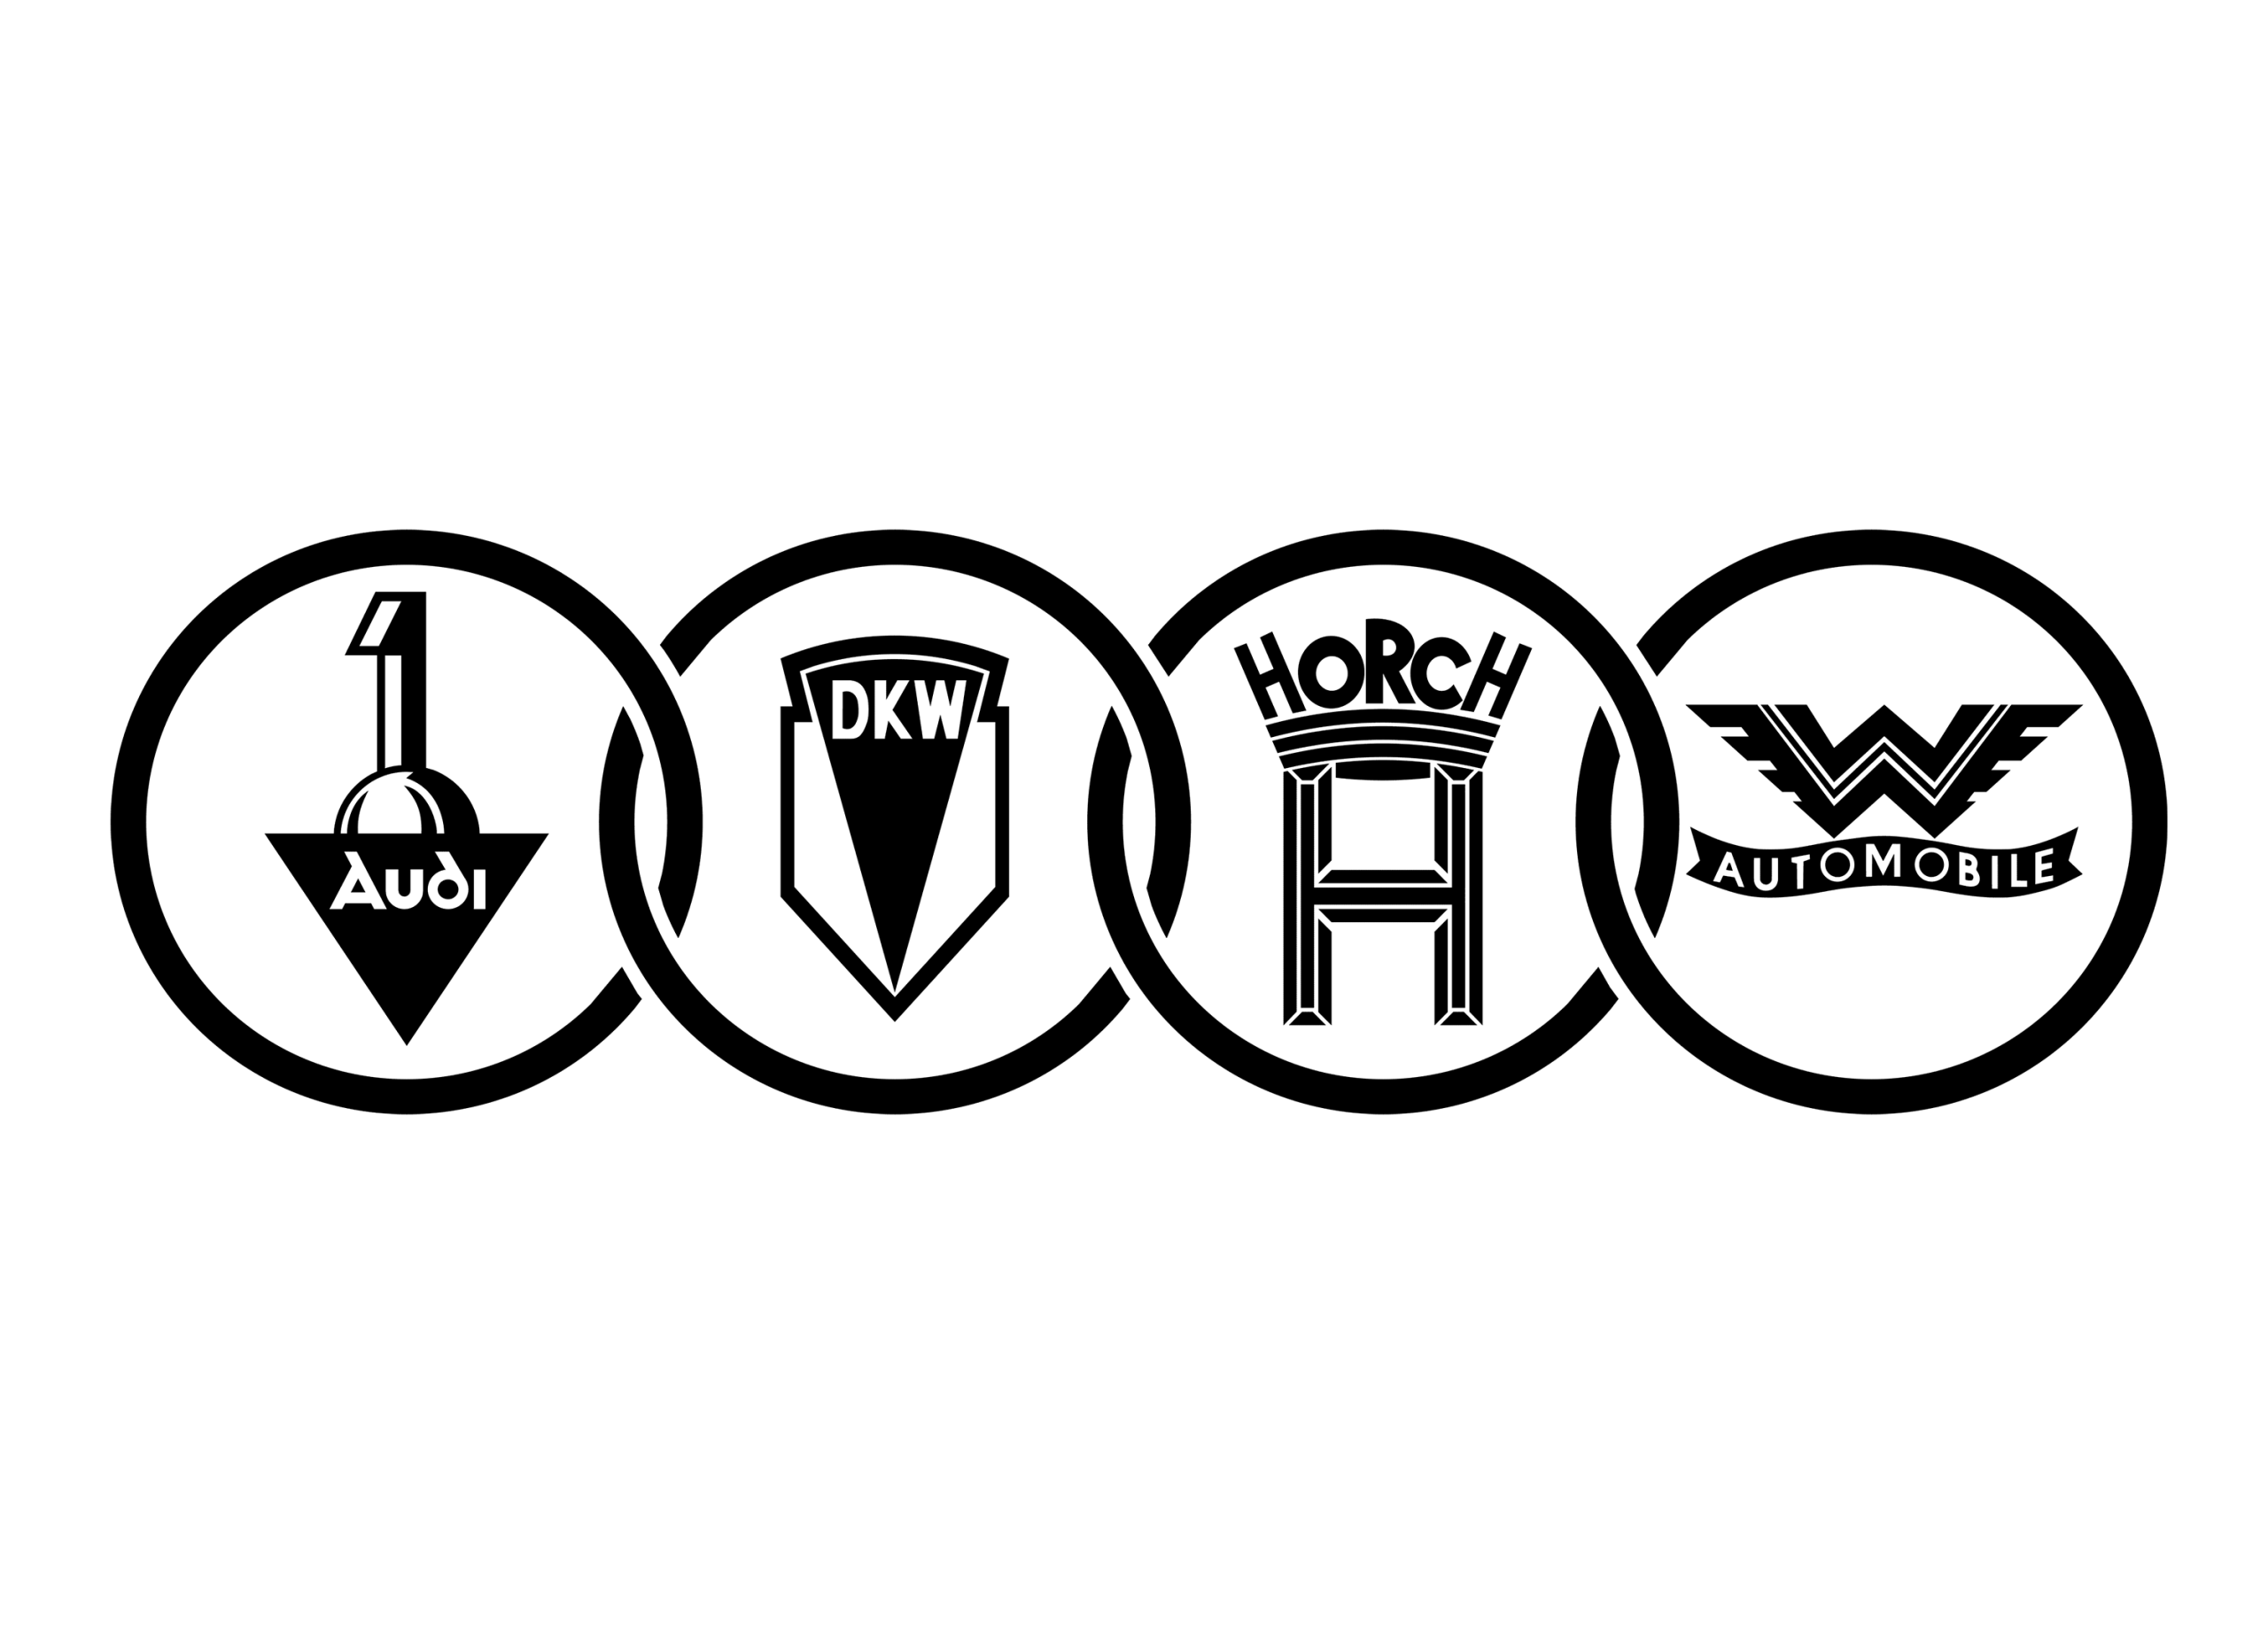 DKW logo 1932-1949